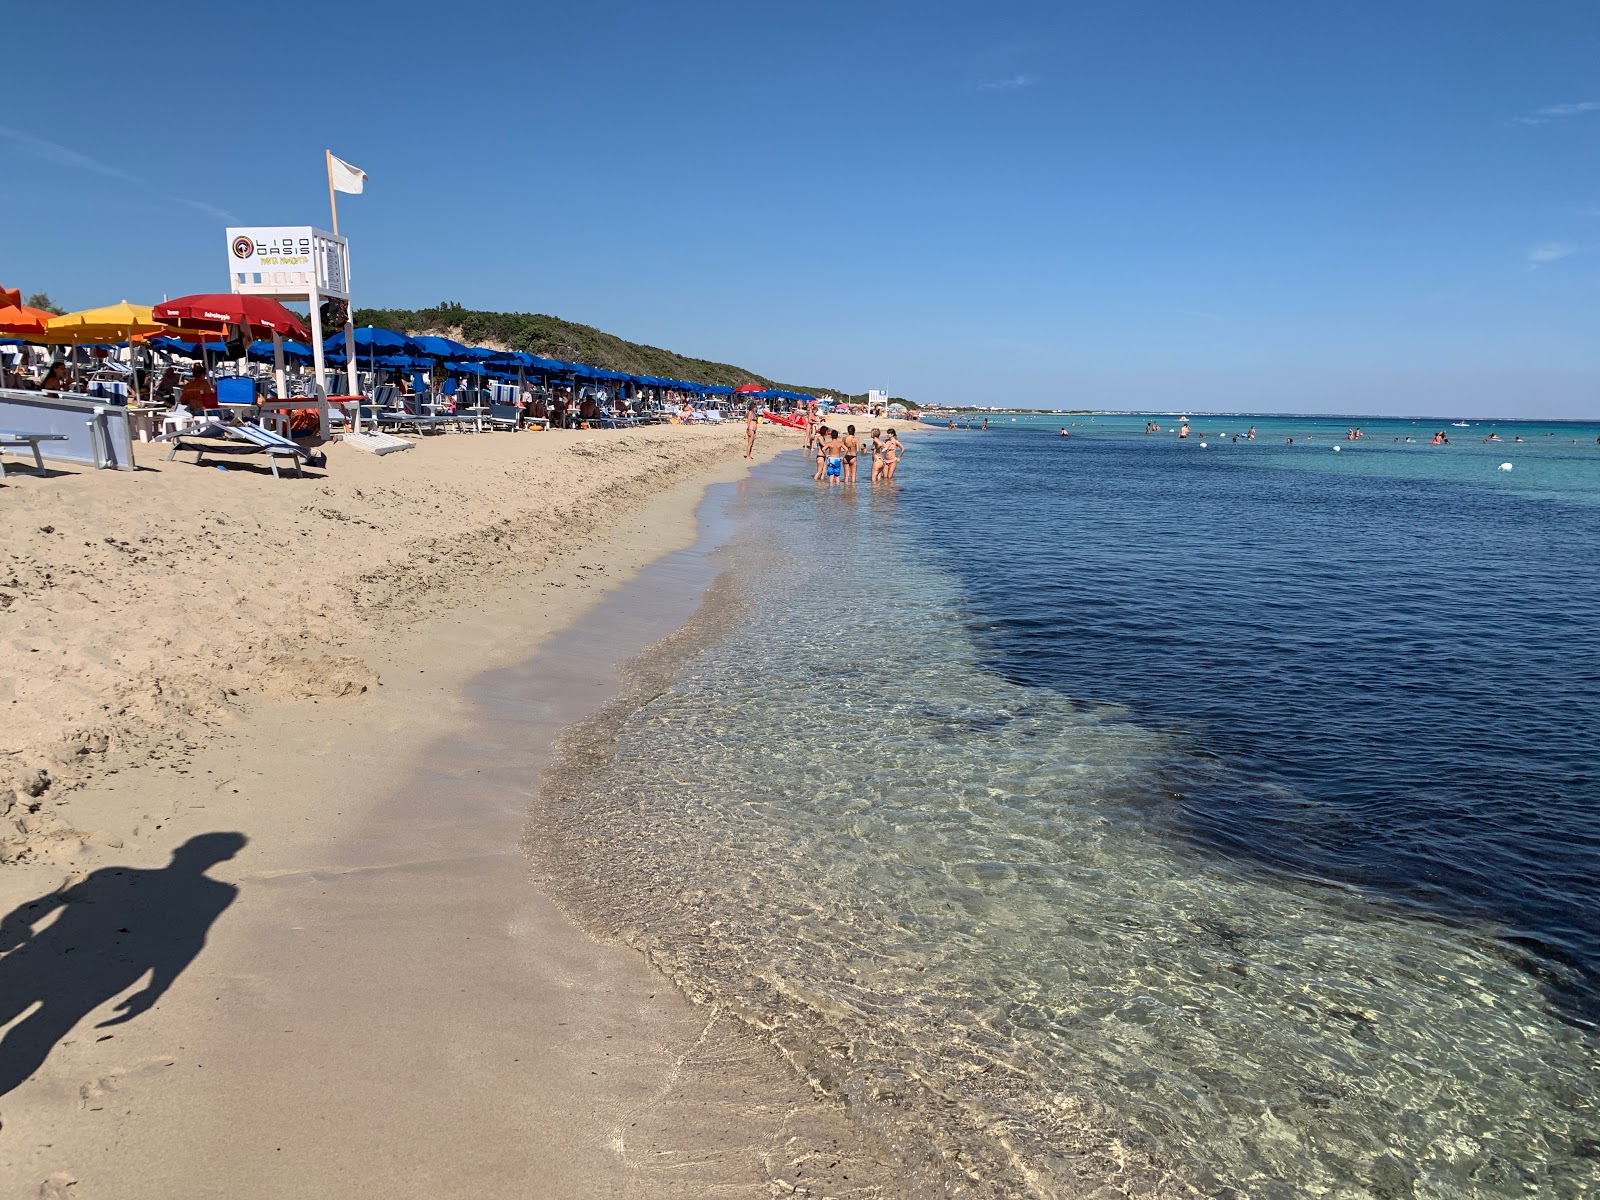 Foto av Spiaggia di Punta Prosciutto med lång rak strand